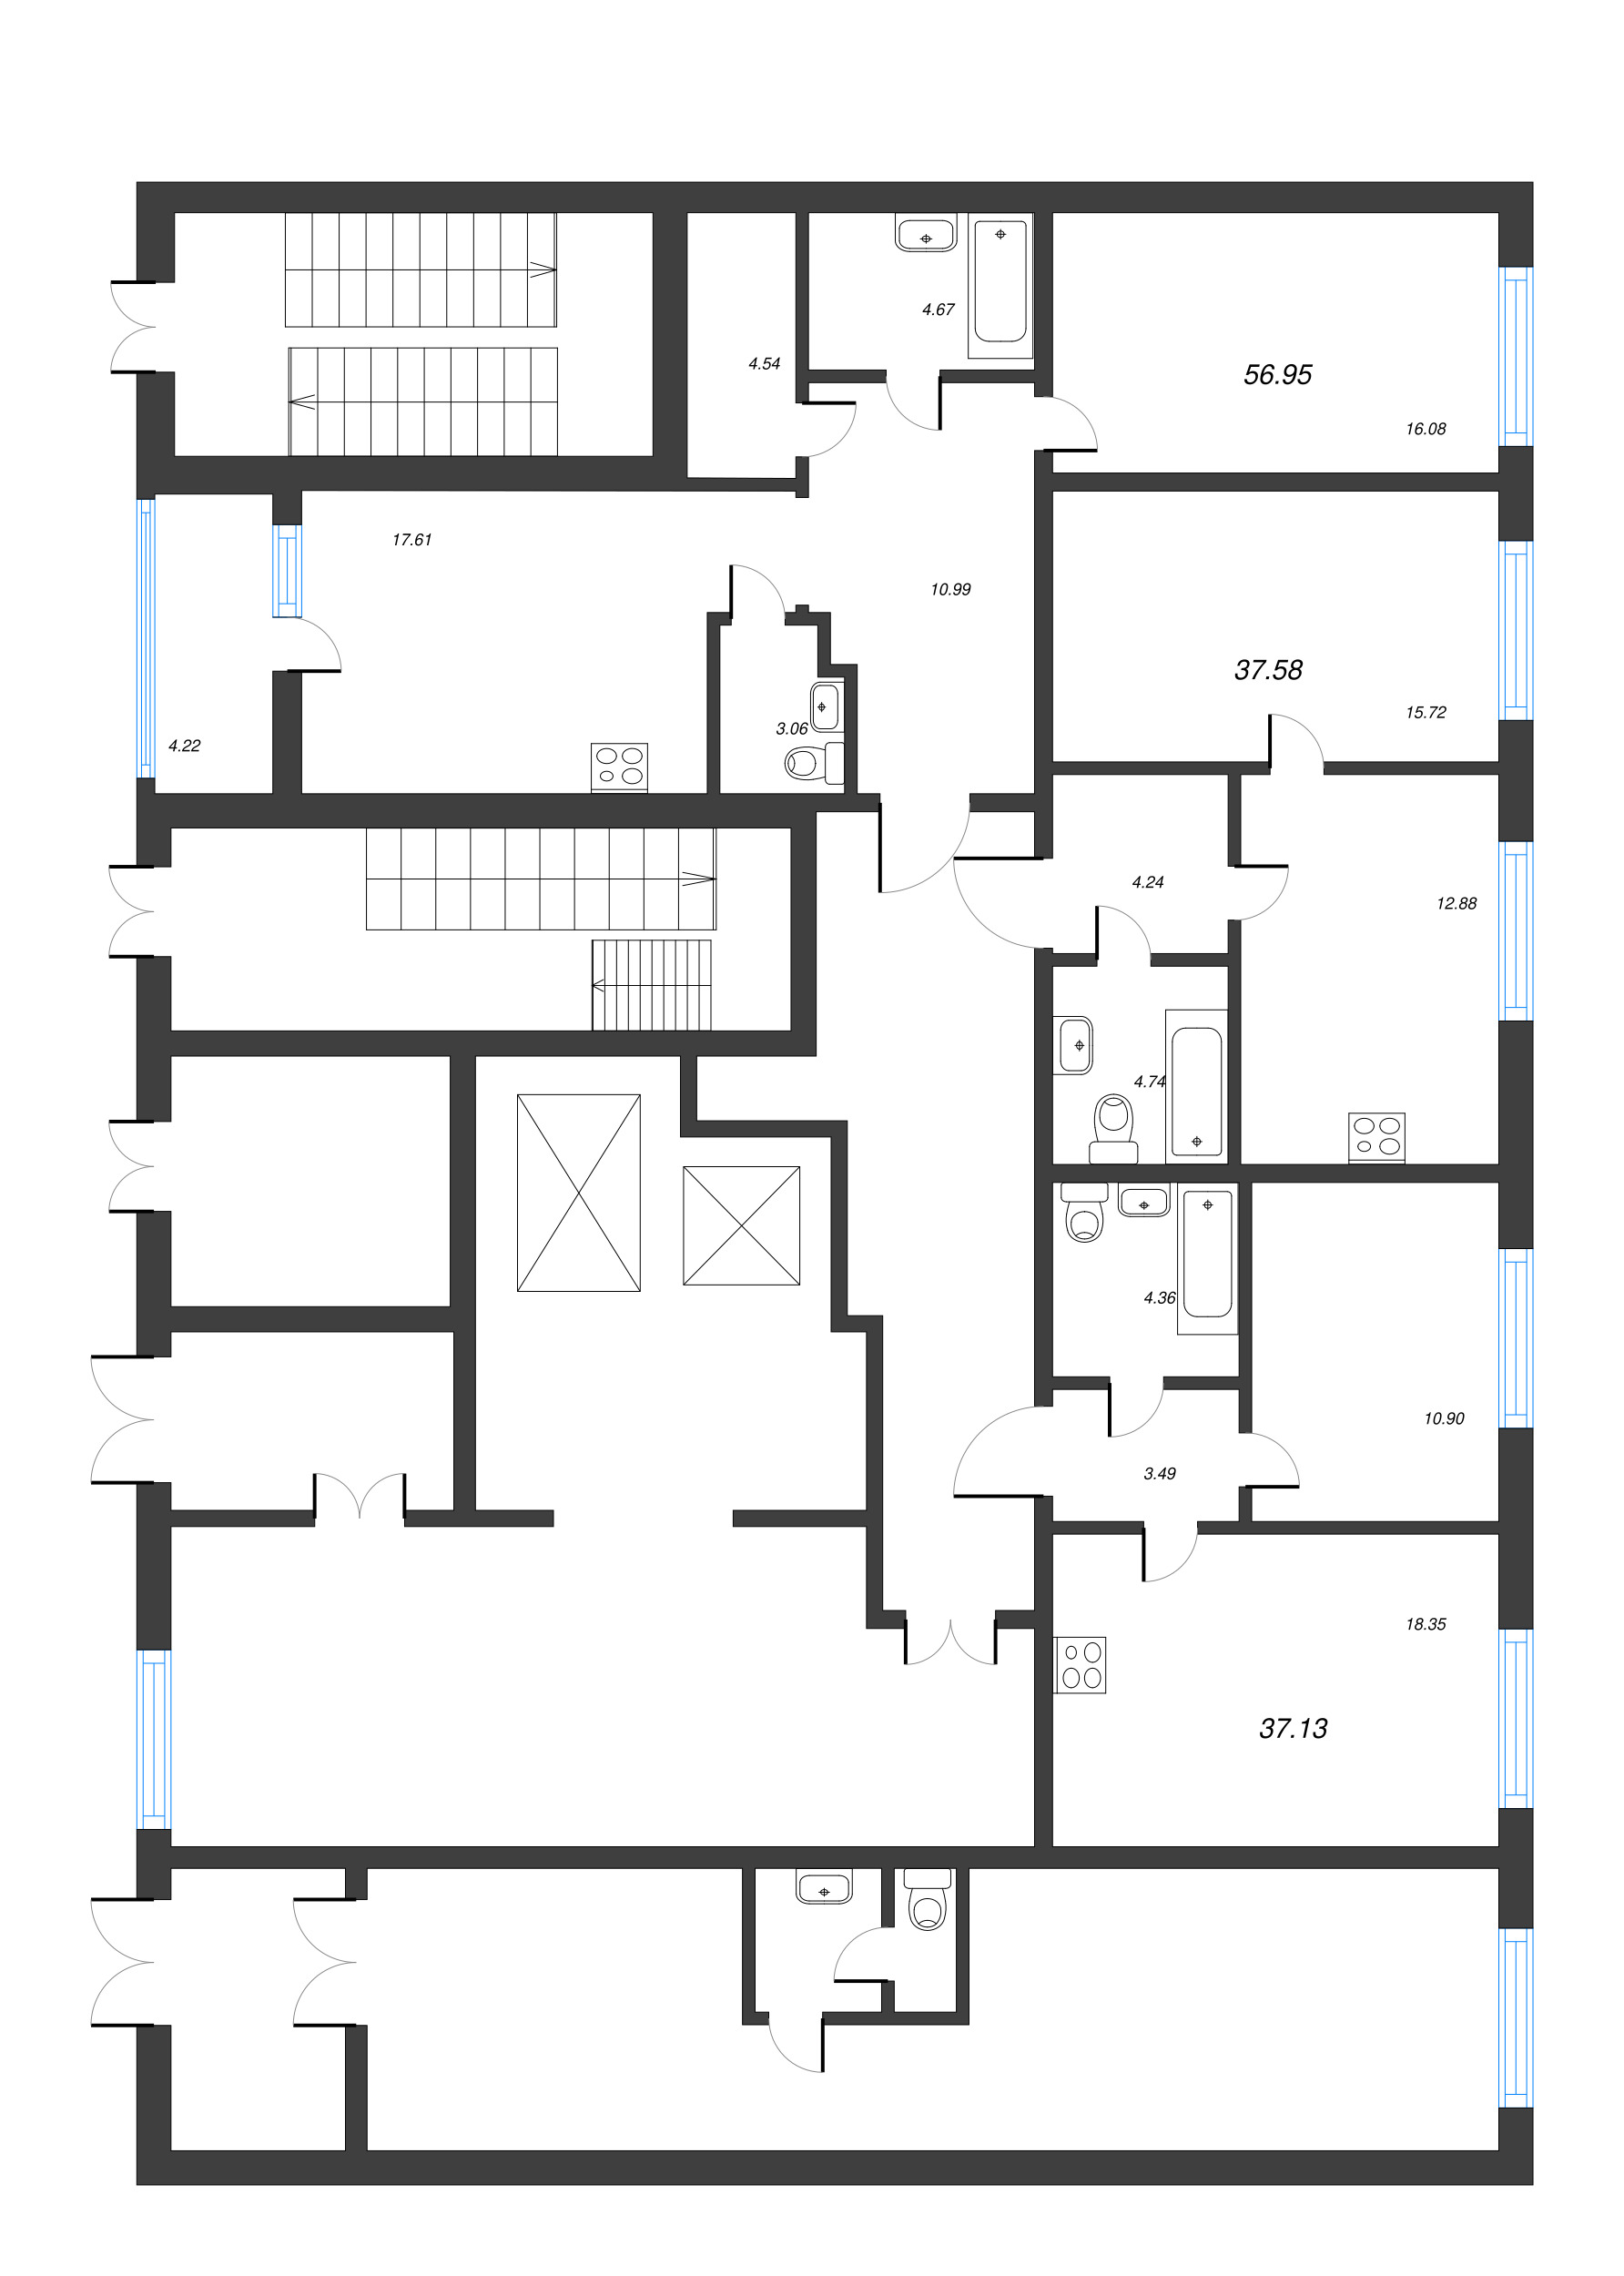 2-комнатная (Евро) квартира, 37.13 м² - планировка этажа